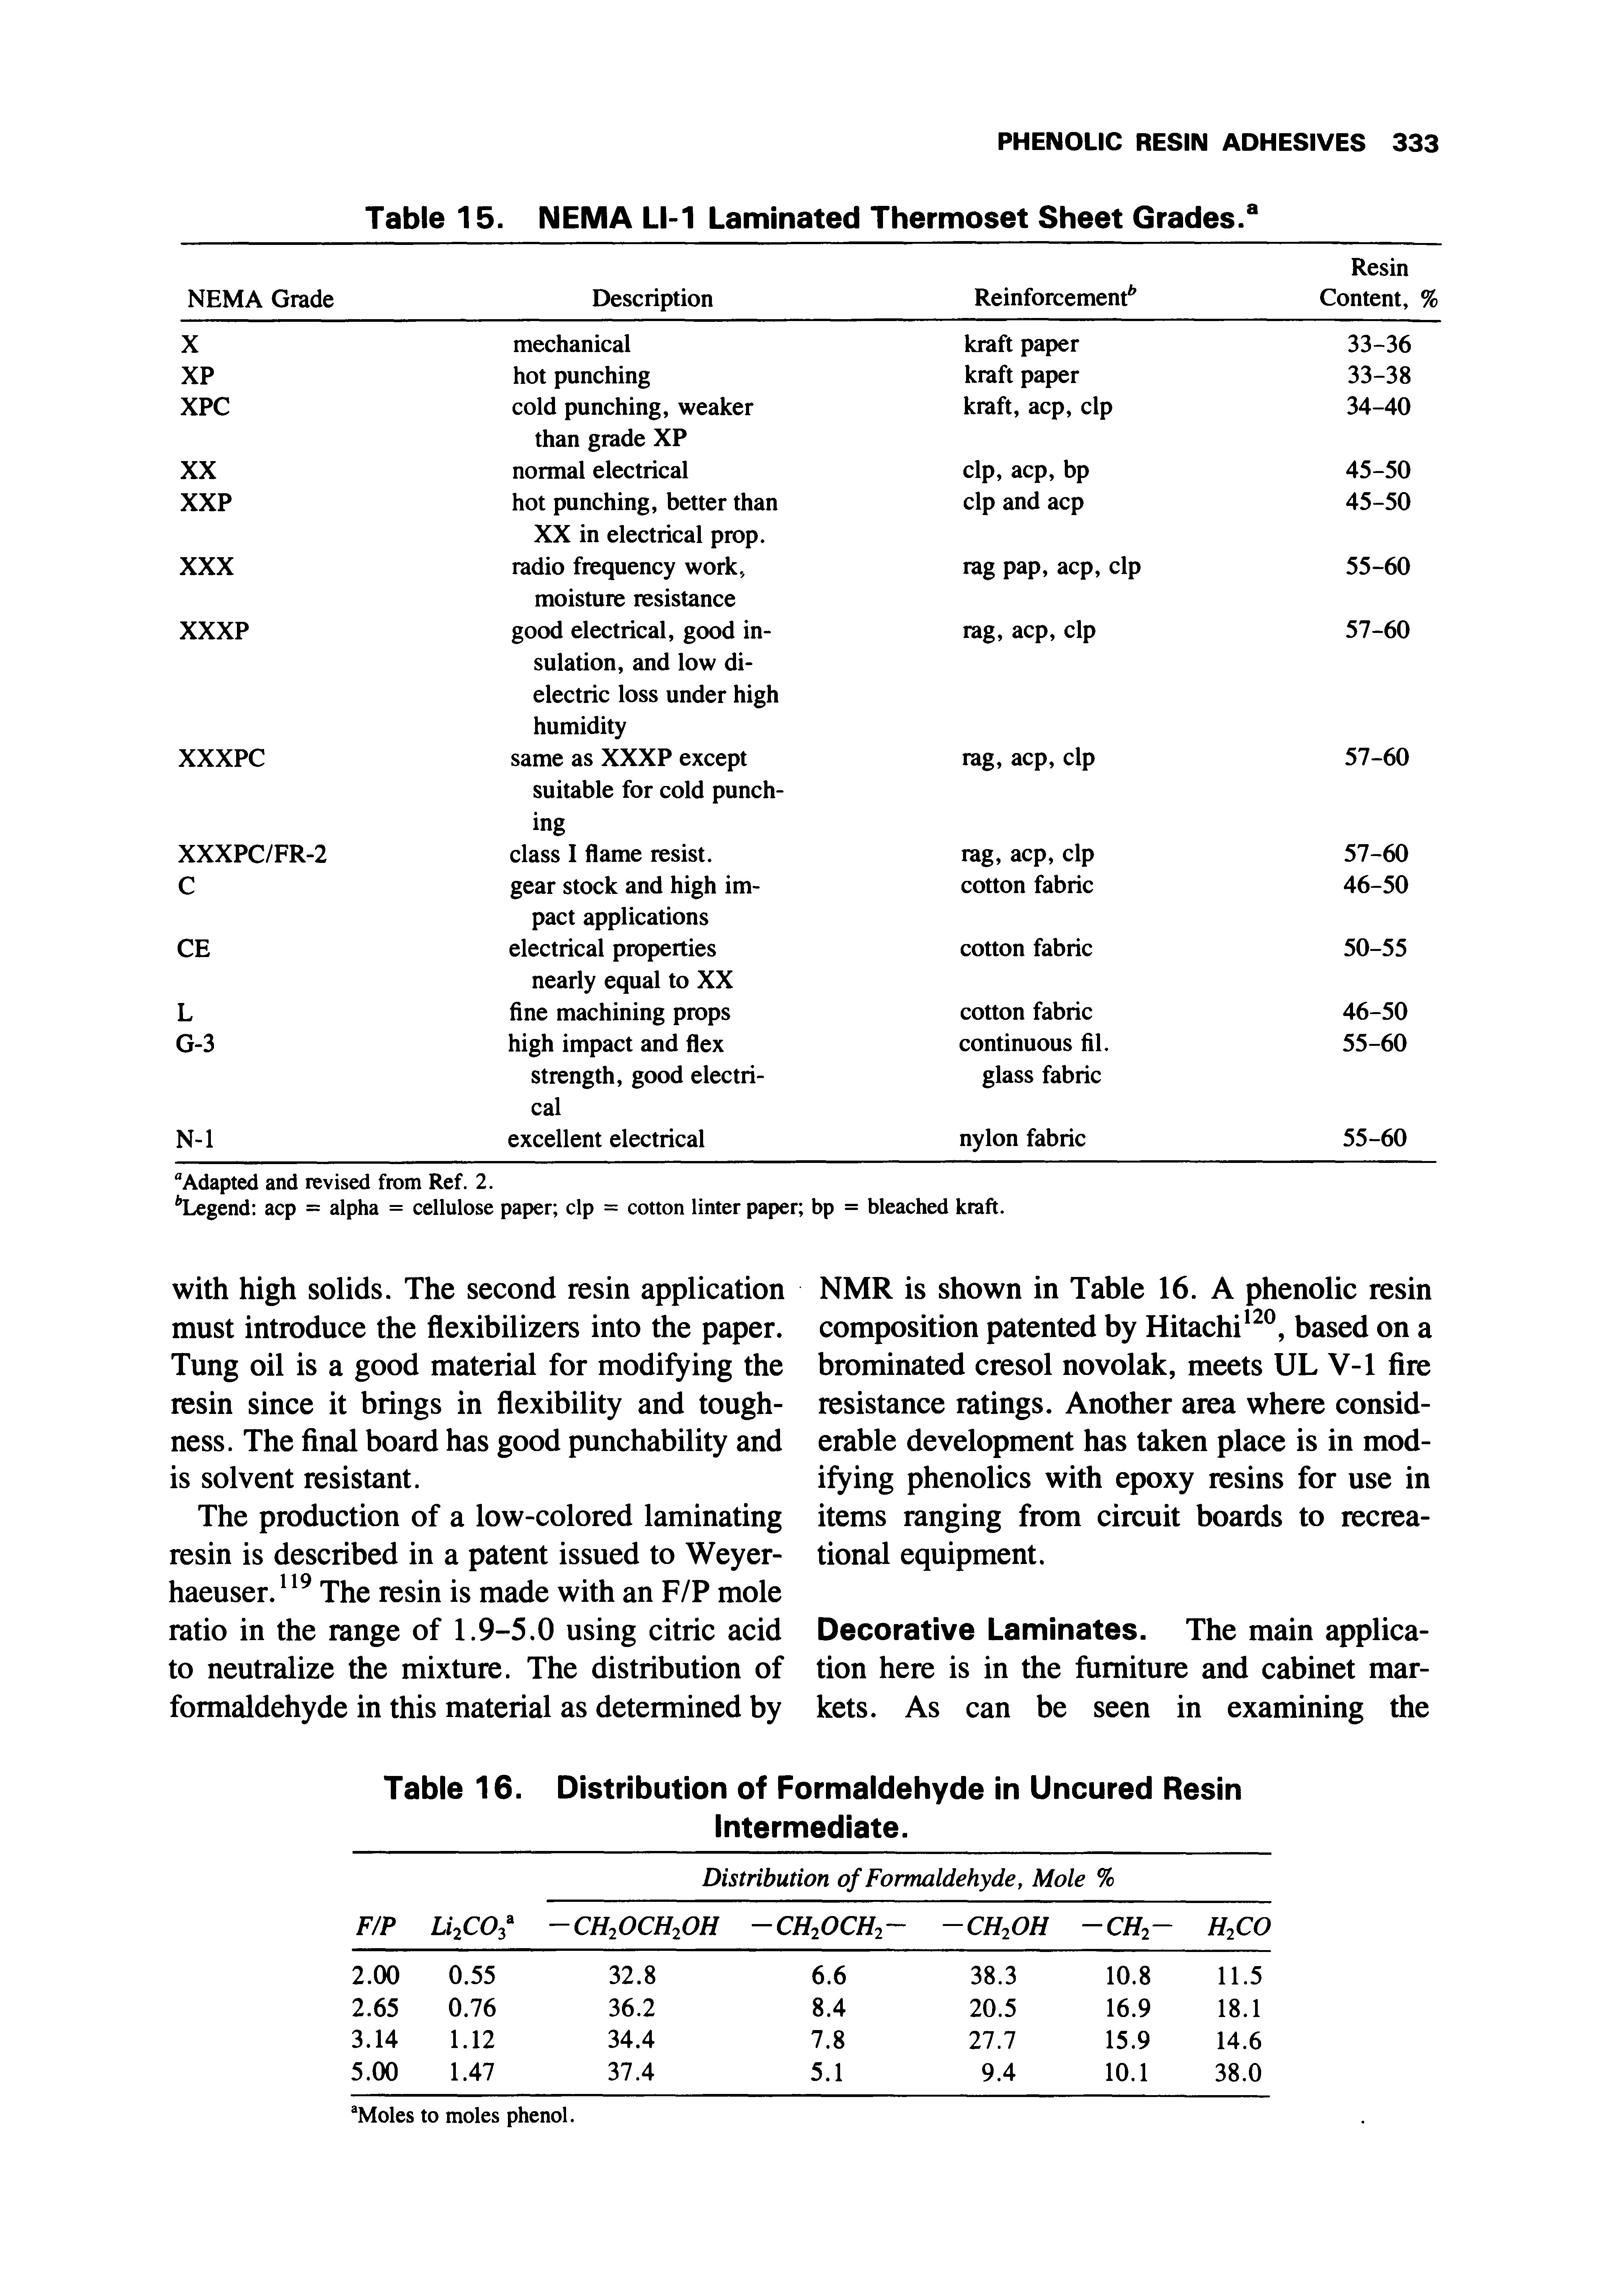 Table 15. NEMA LI-1 Laminated Thermoset Sheet Grades.